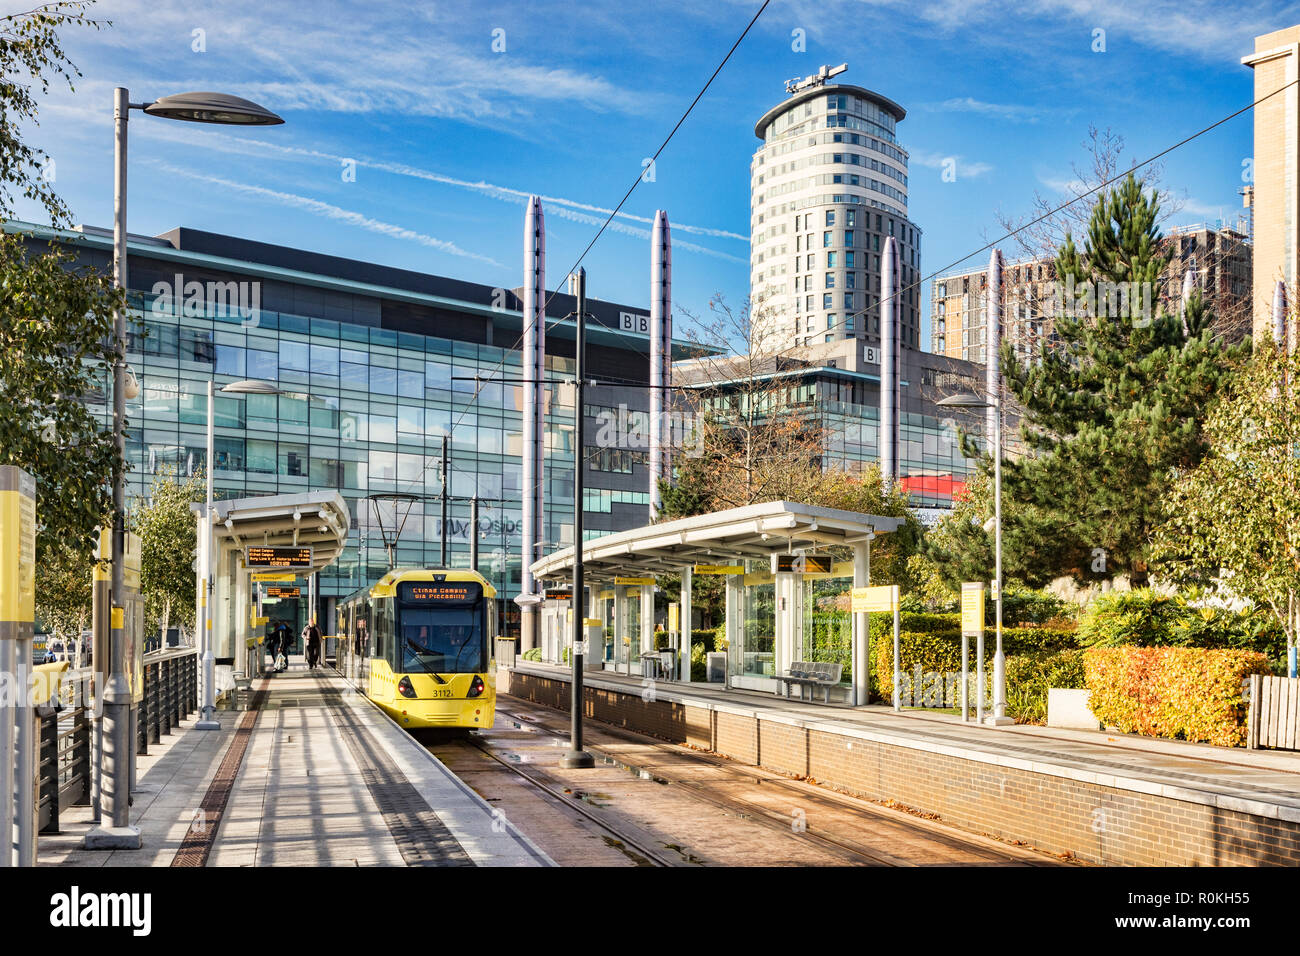 2 November 2018: Manchester, UK - Metrolink tram at Media City UK Station on a sunny autumn day with blue sky. Stock Photo